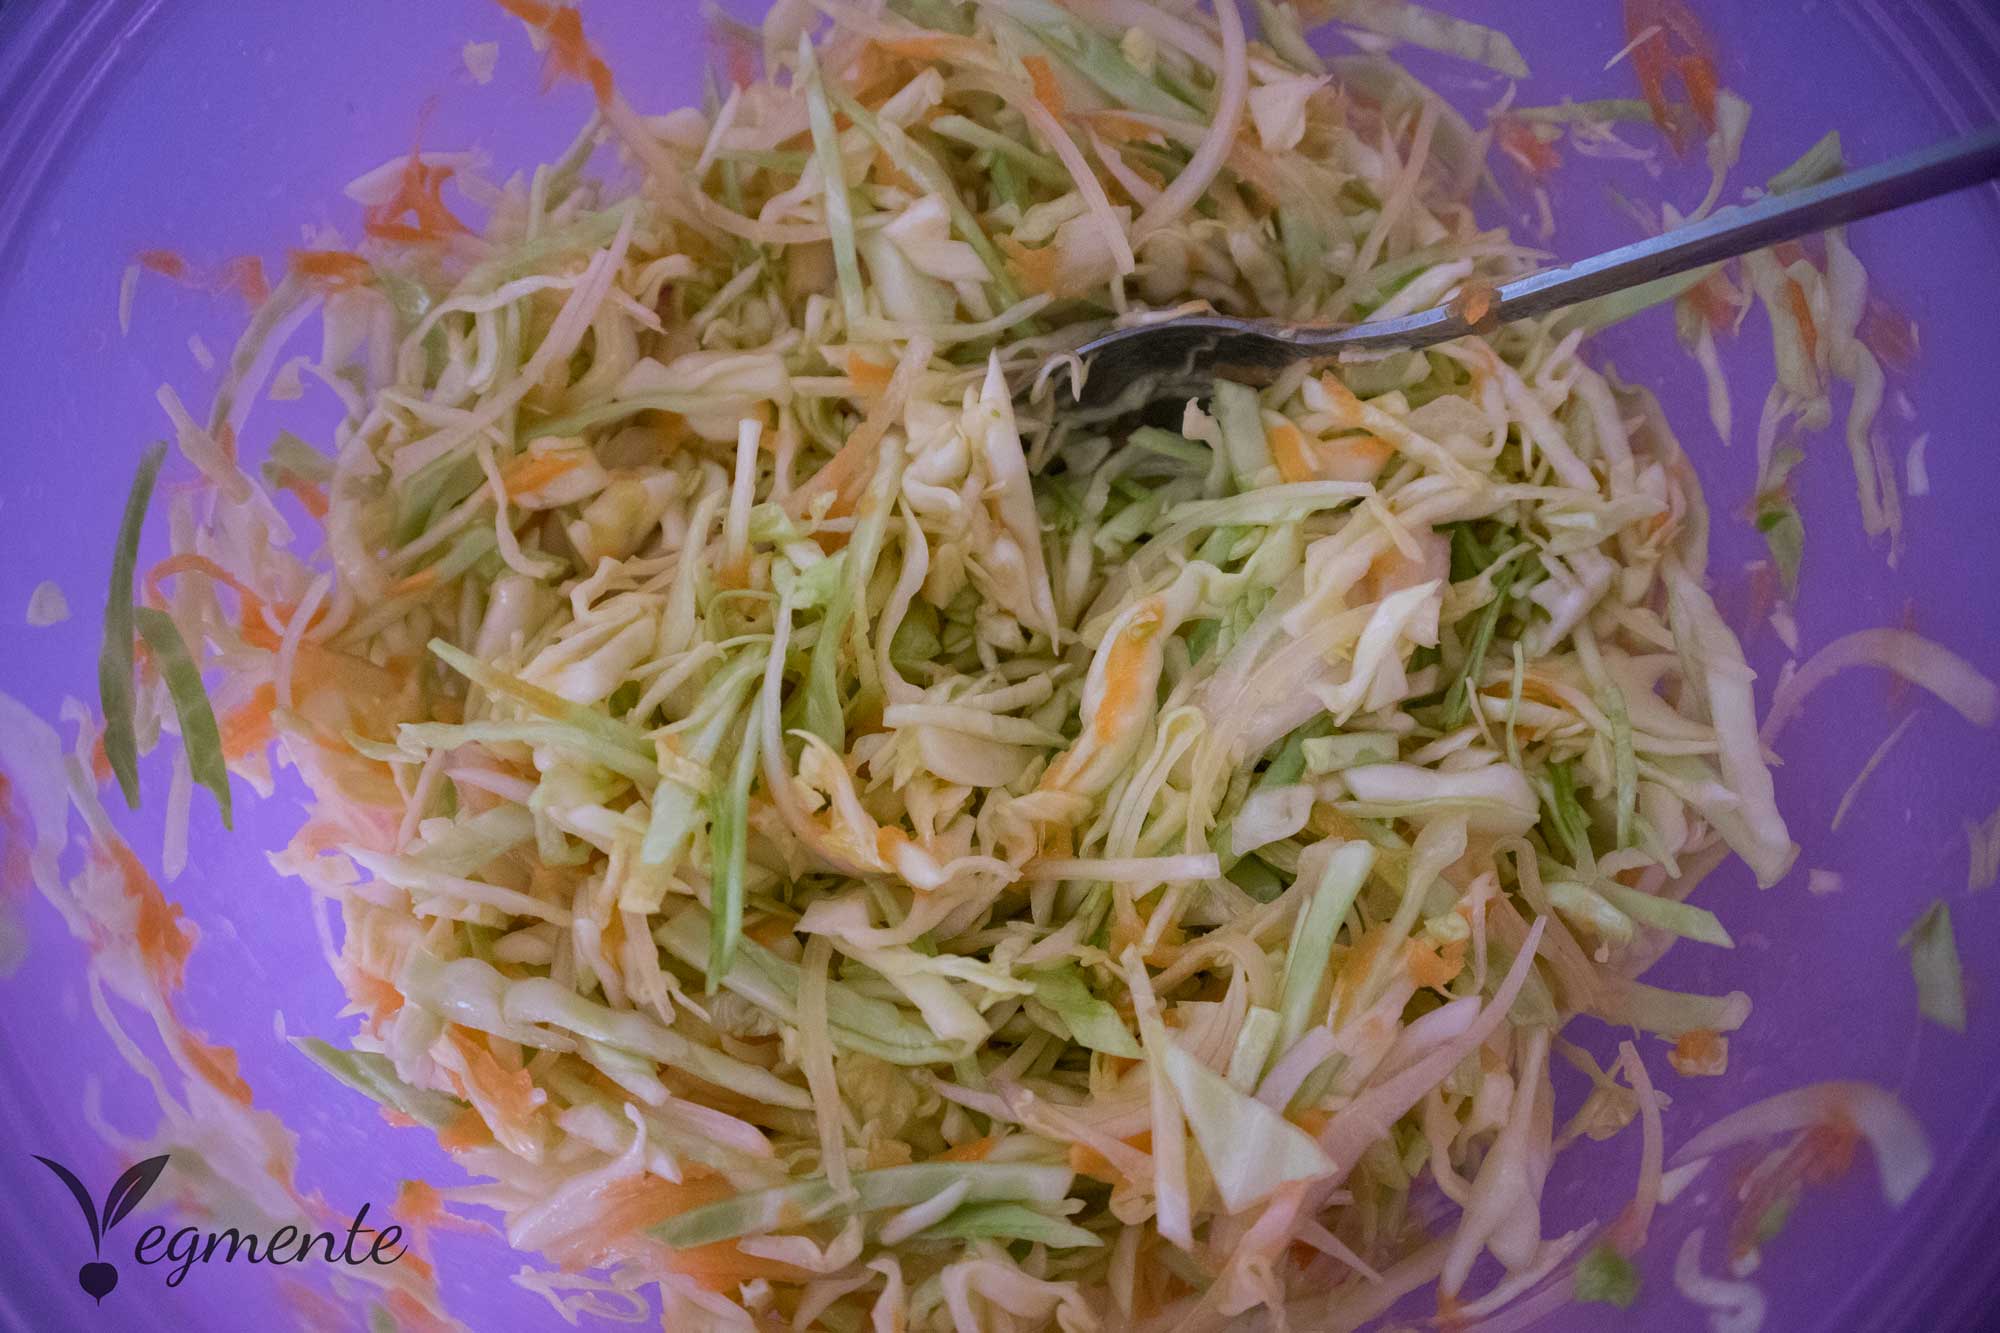 Ingredientes da salada vegmente